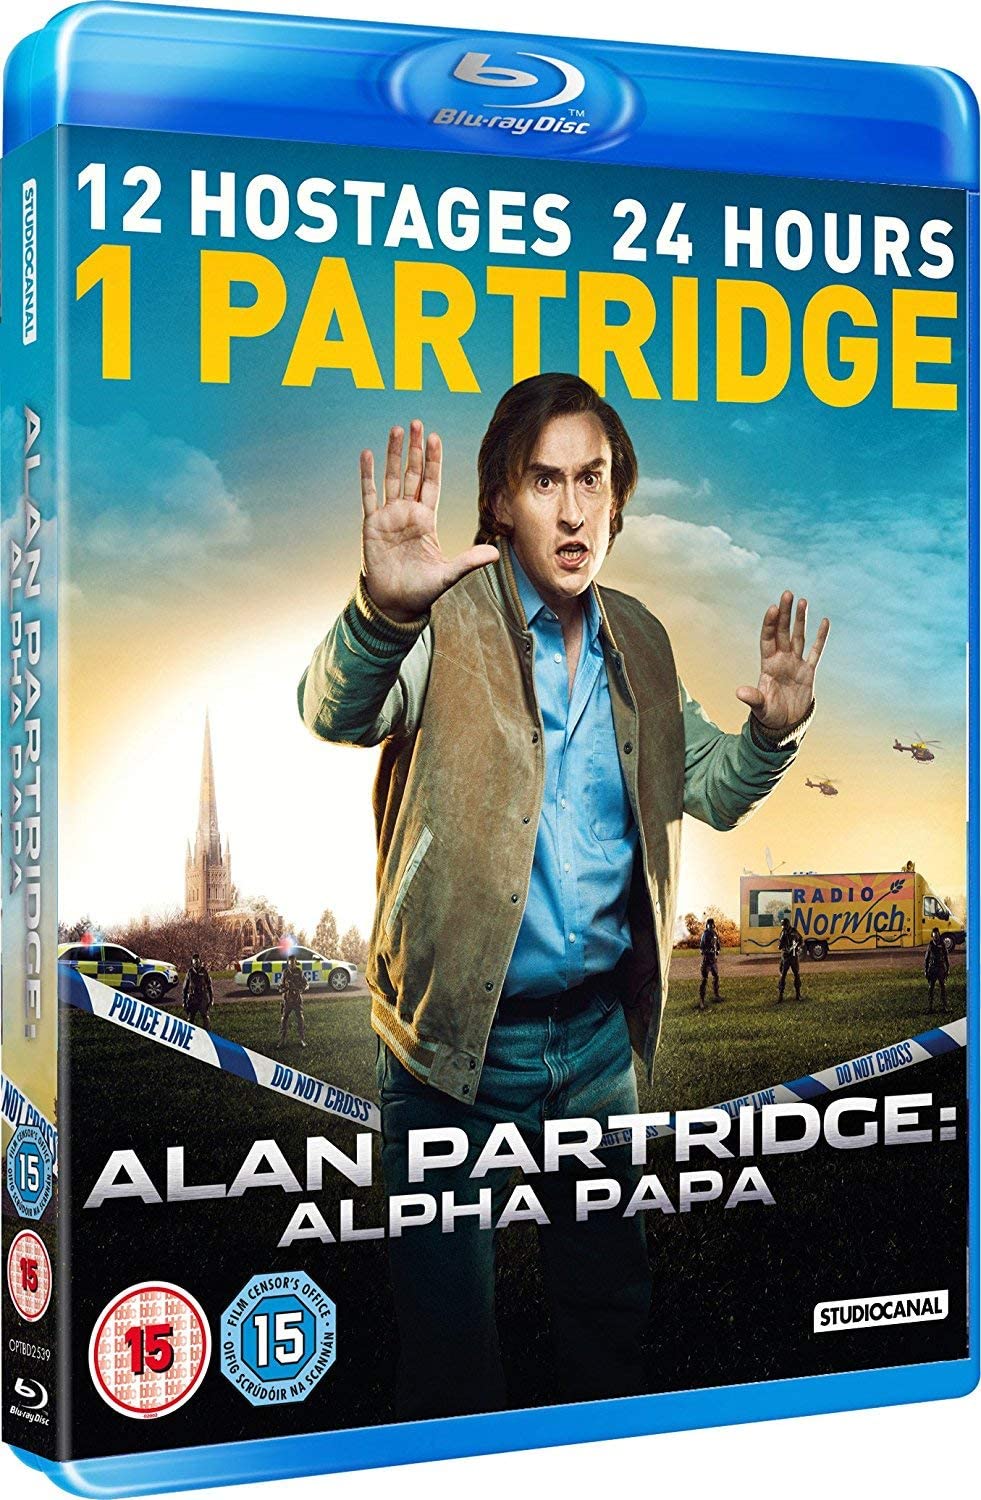 Alan Partridge: Alpha Papa (Premium Partridge Edition) [Blu-ray]